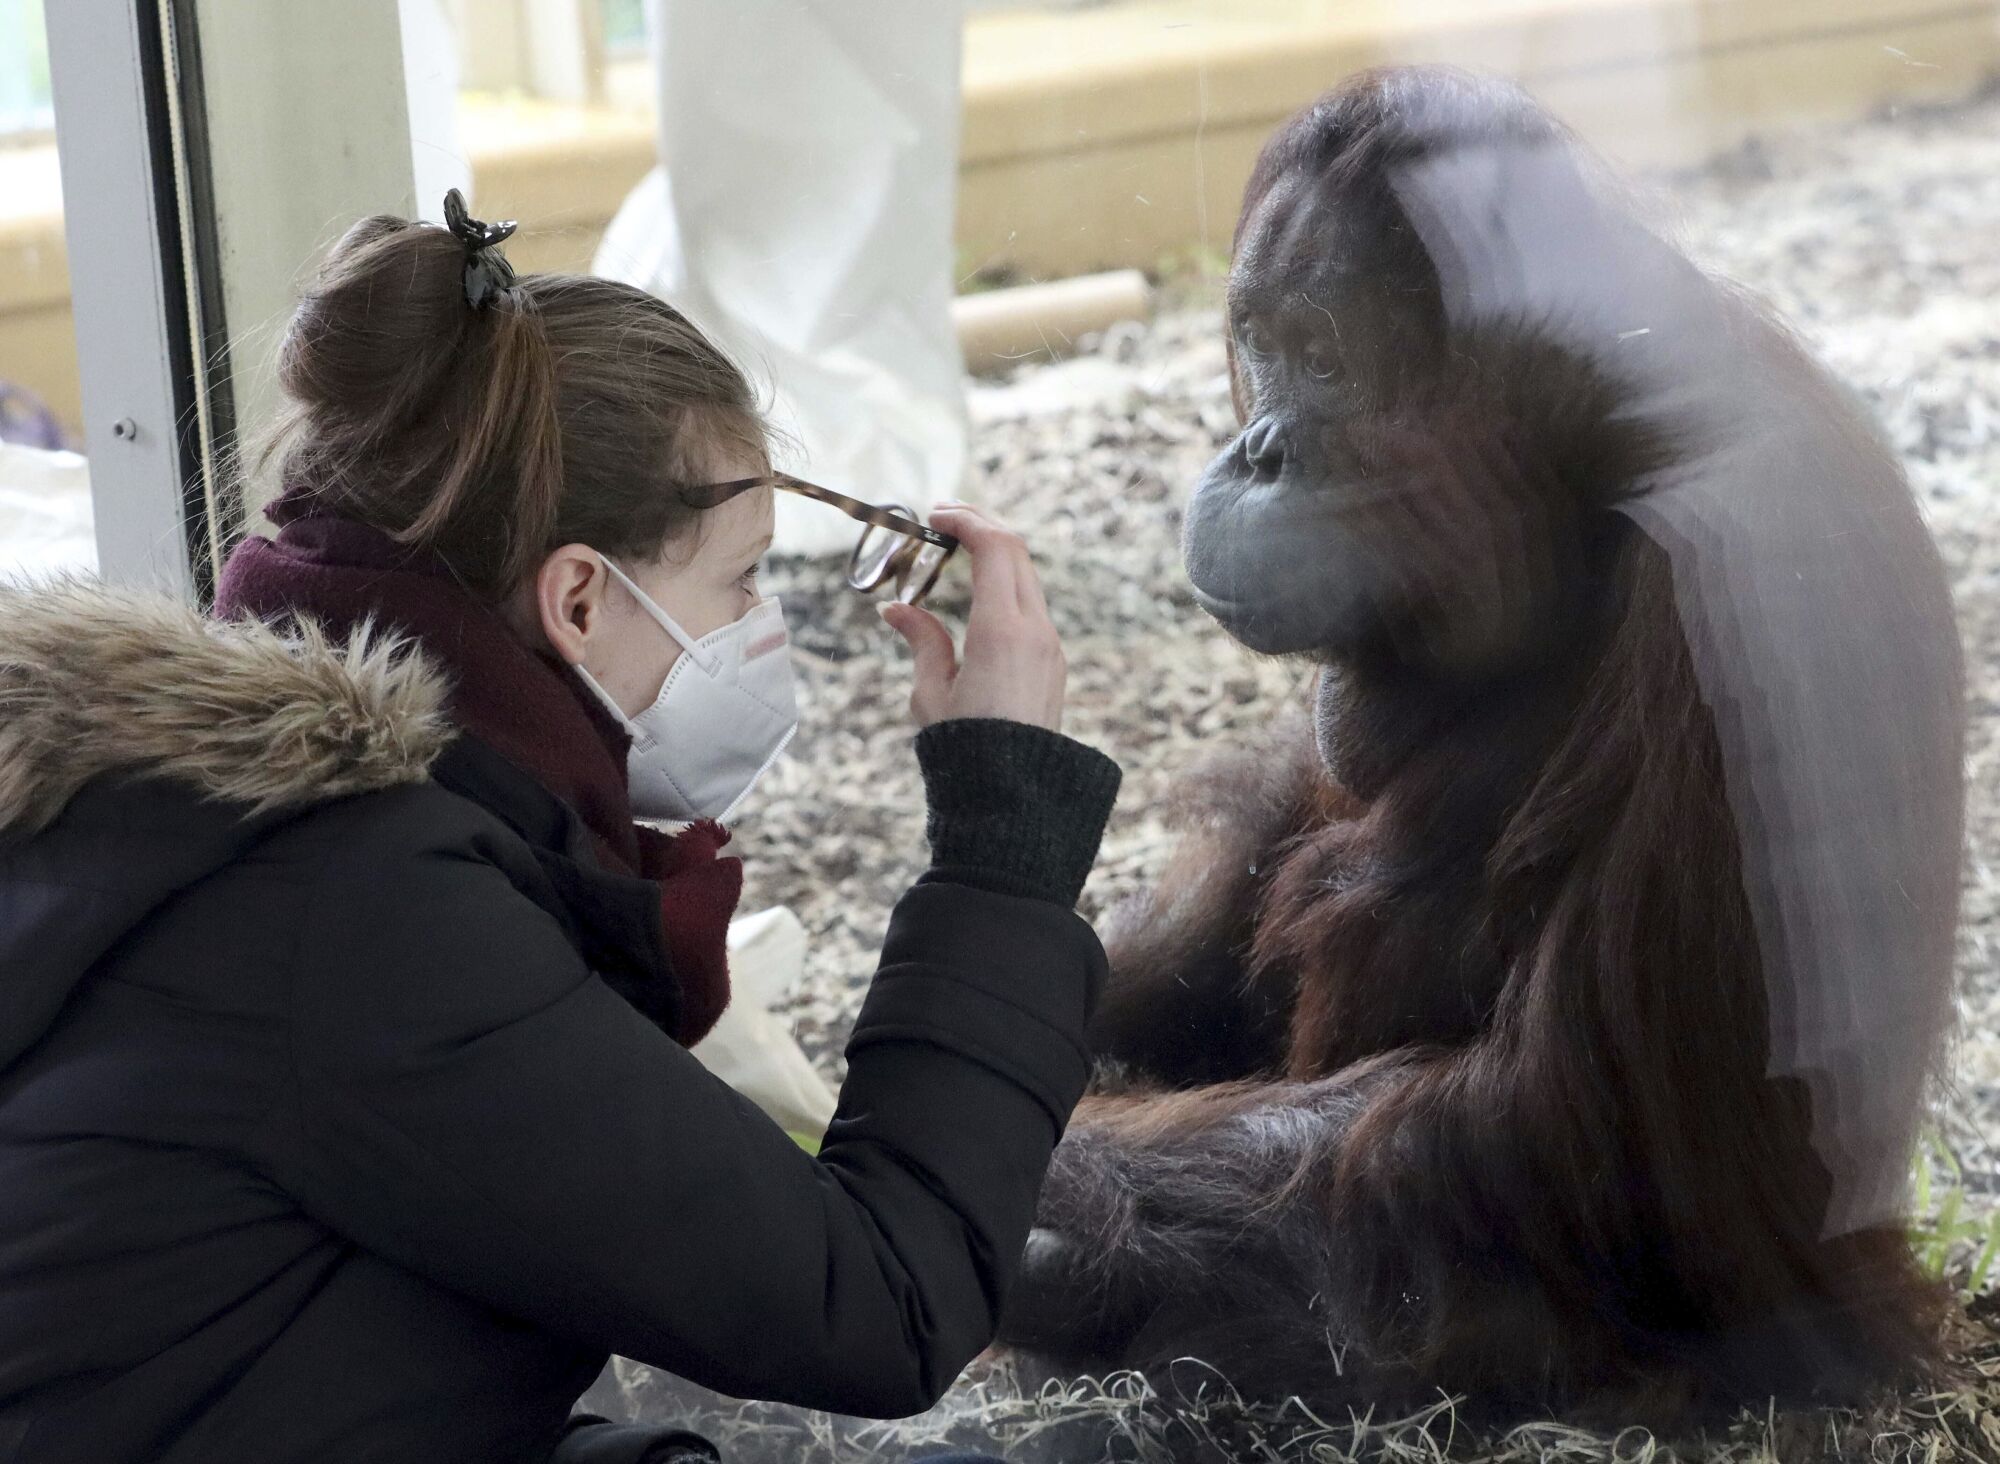 A visitor wears a mask while observing an orangutan at a zoo in Vienna, Austria. 